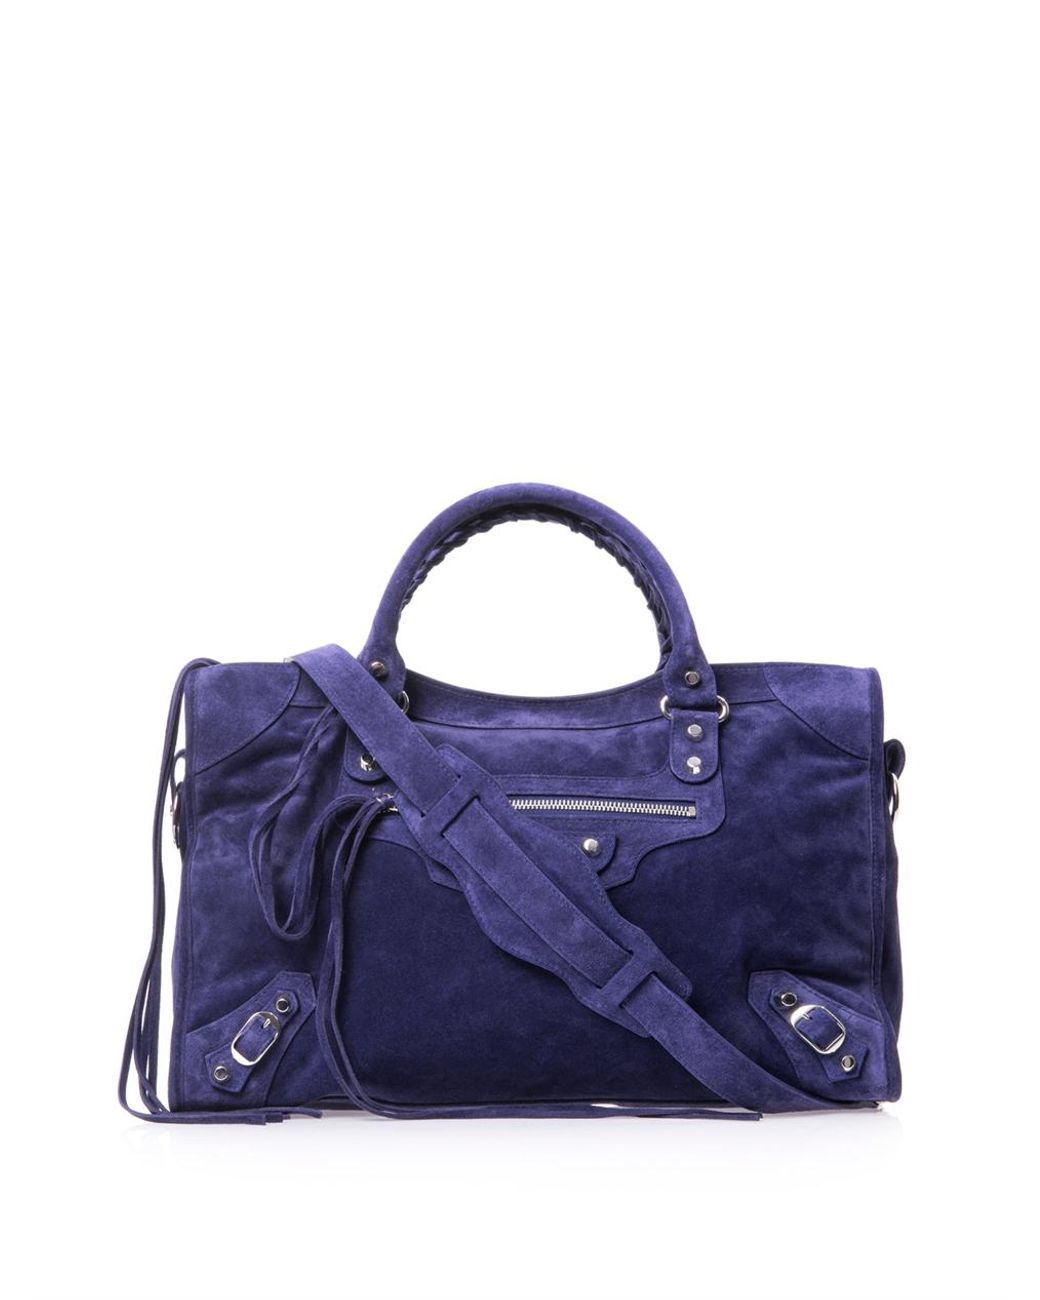 Balenciaga Classic Suede City Bag in Blue Lyst